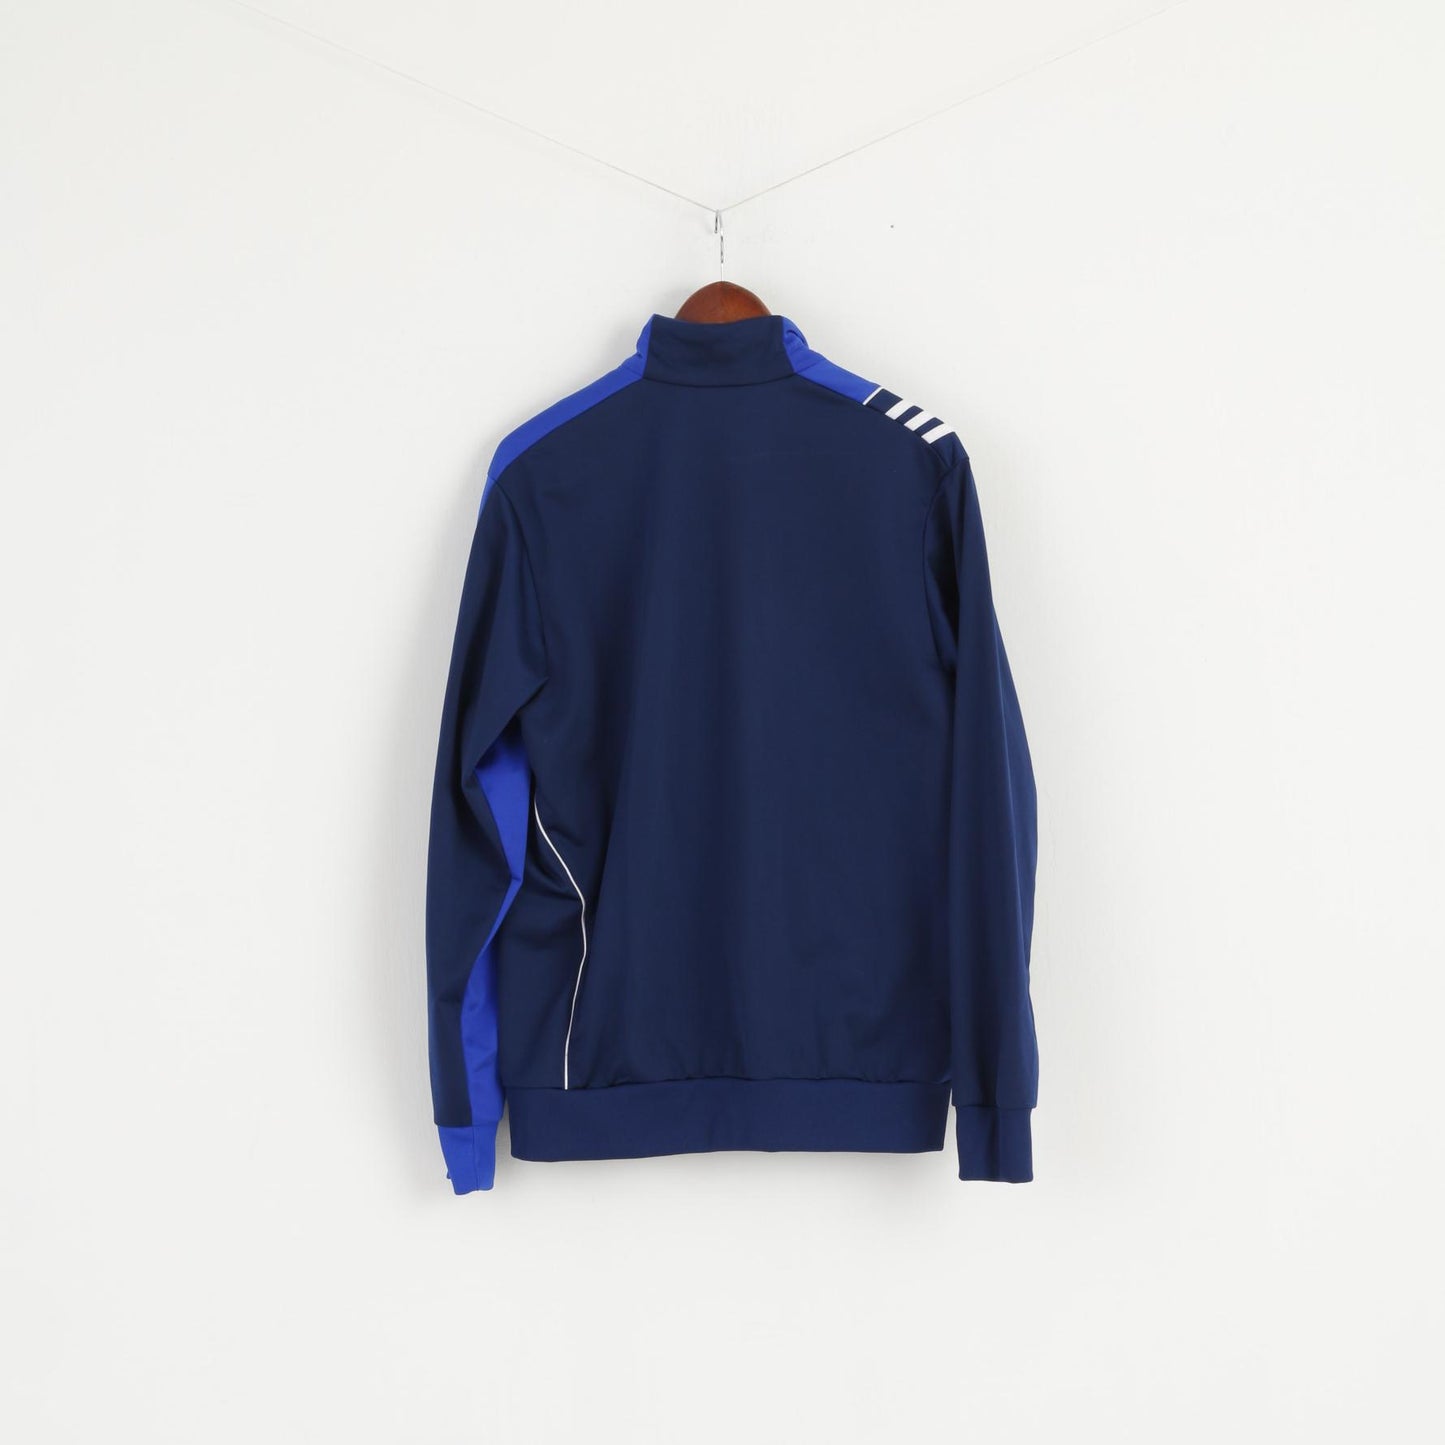 Adidas Men M Sweatshirt Bleu Marine Brillant Retro Fit Training Full Zipper Activewear